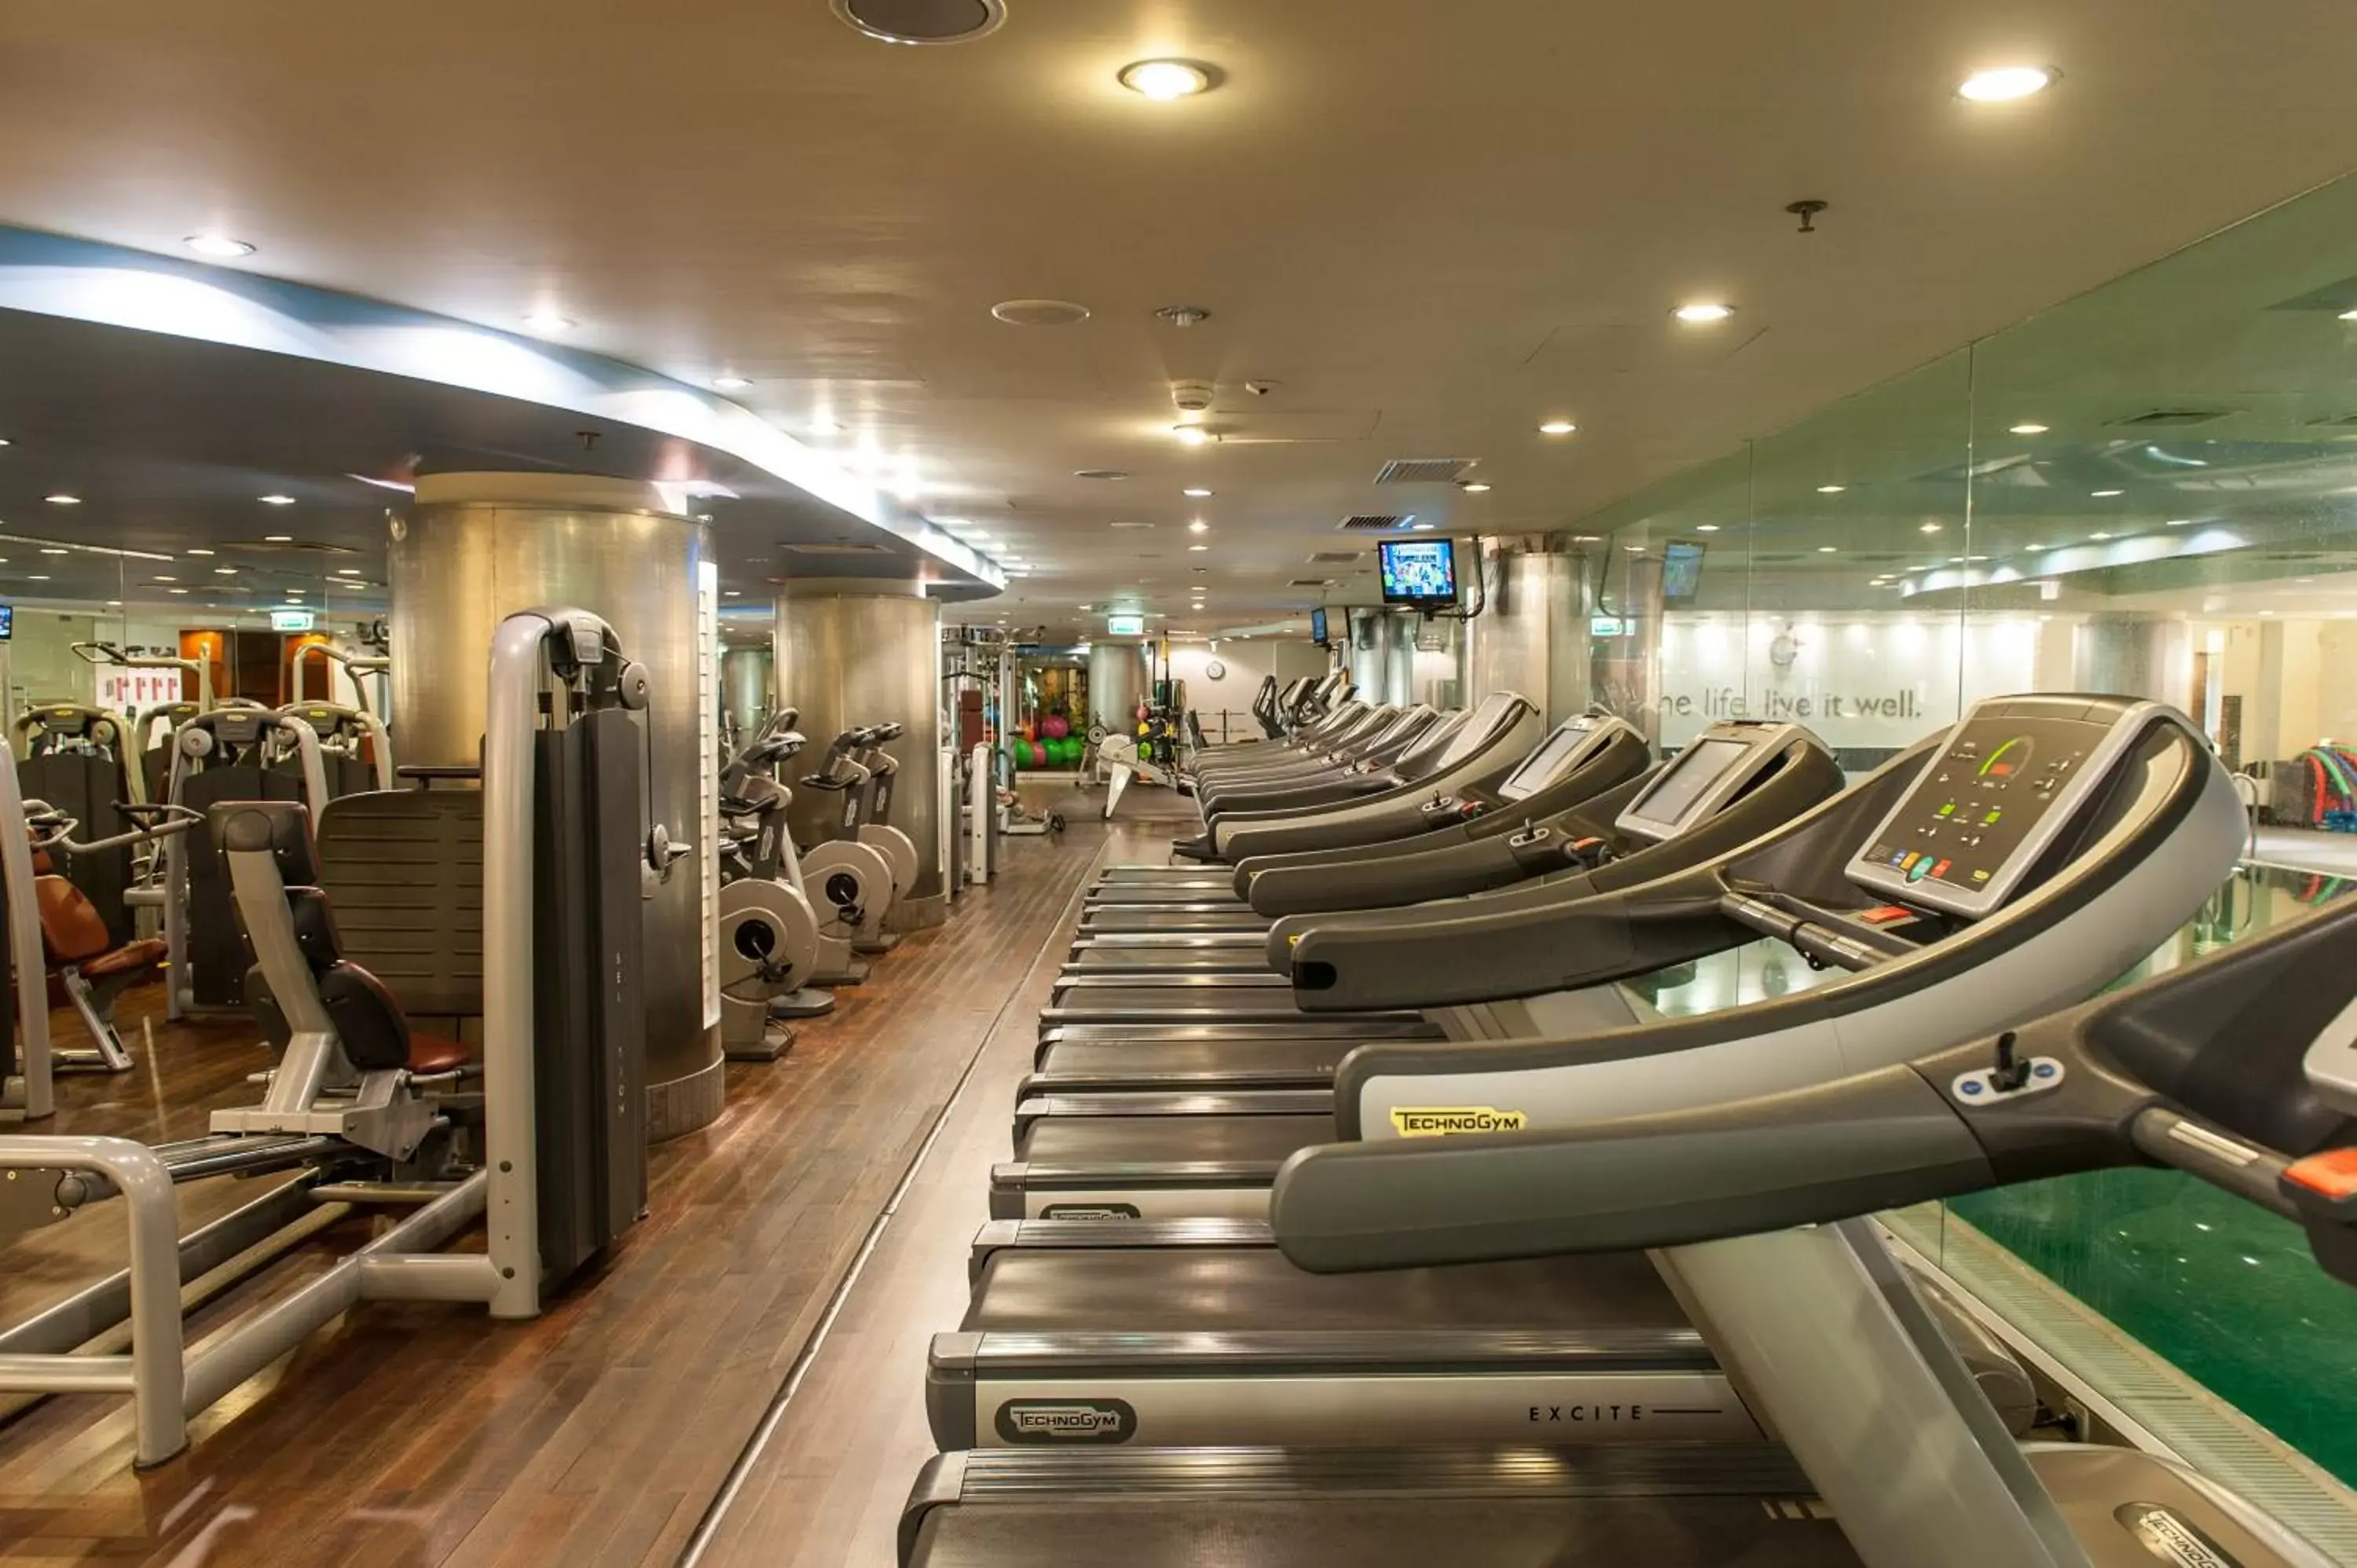 Fitness centre/facilities, Fitness Center/Facilities in Regent Warsaw Hotel